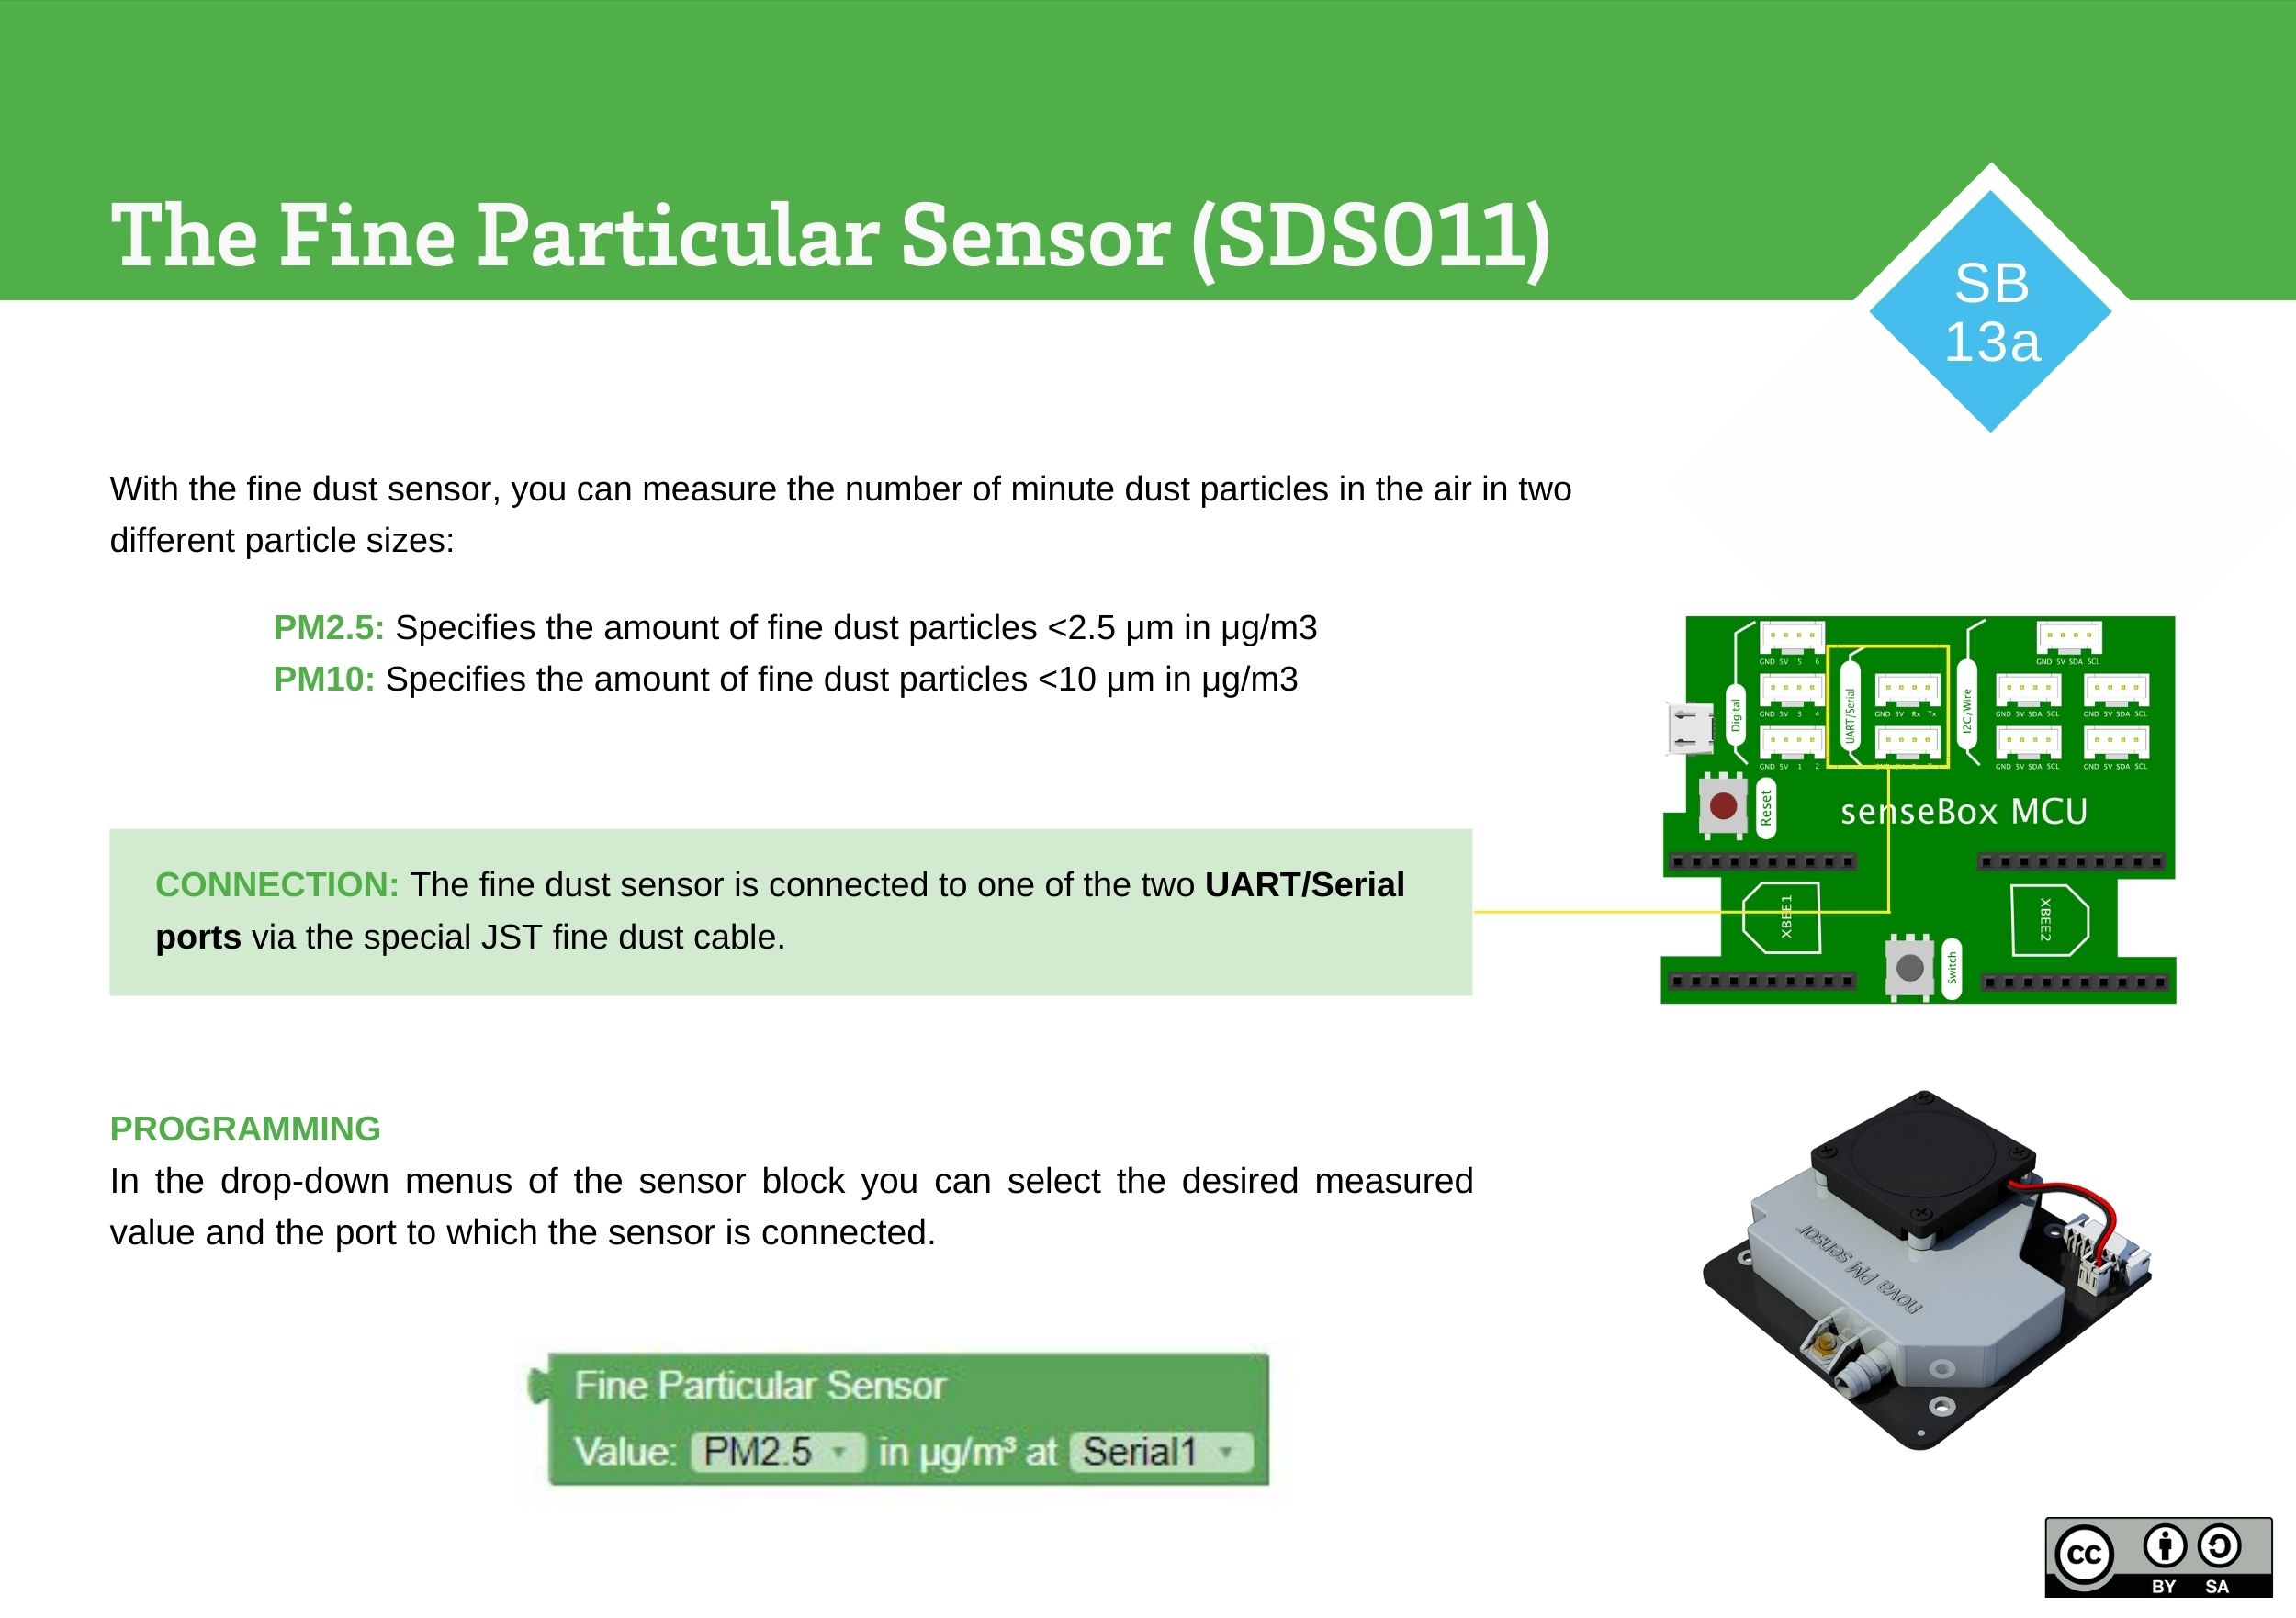 Fine dust sensor (SDS011)